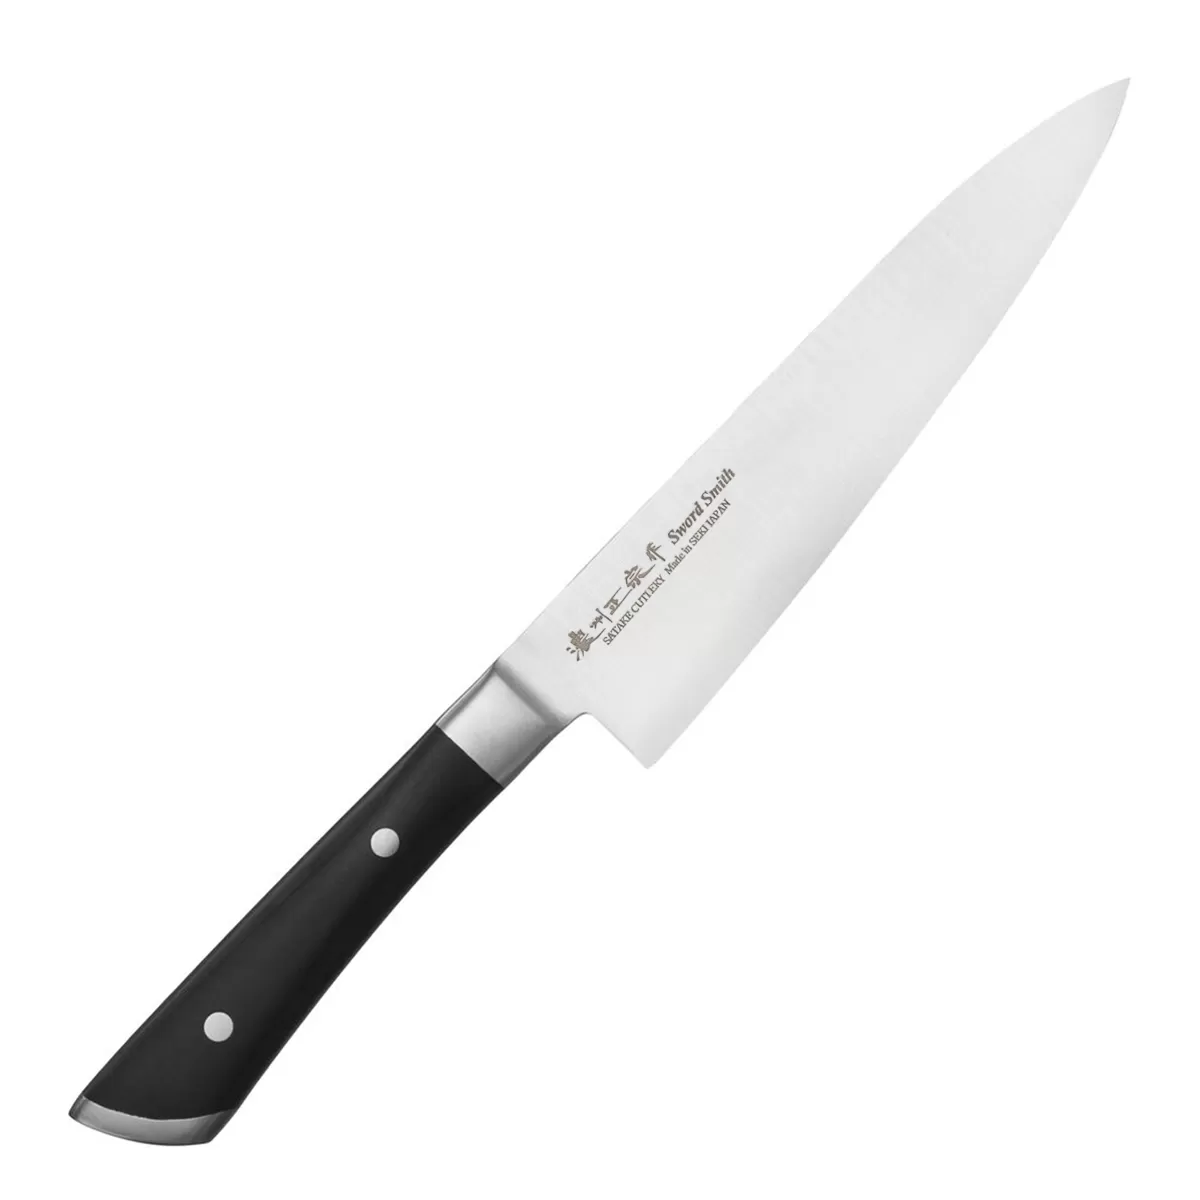 Нож кухонный Шеф Satake "Hiroki" 180мм, сталь AUS-8 57-58HRC ручка ABS пластик Япония